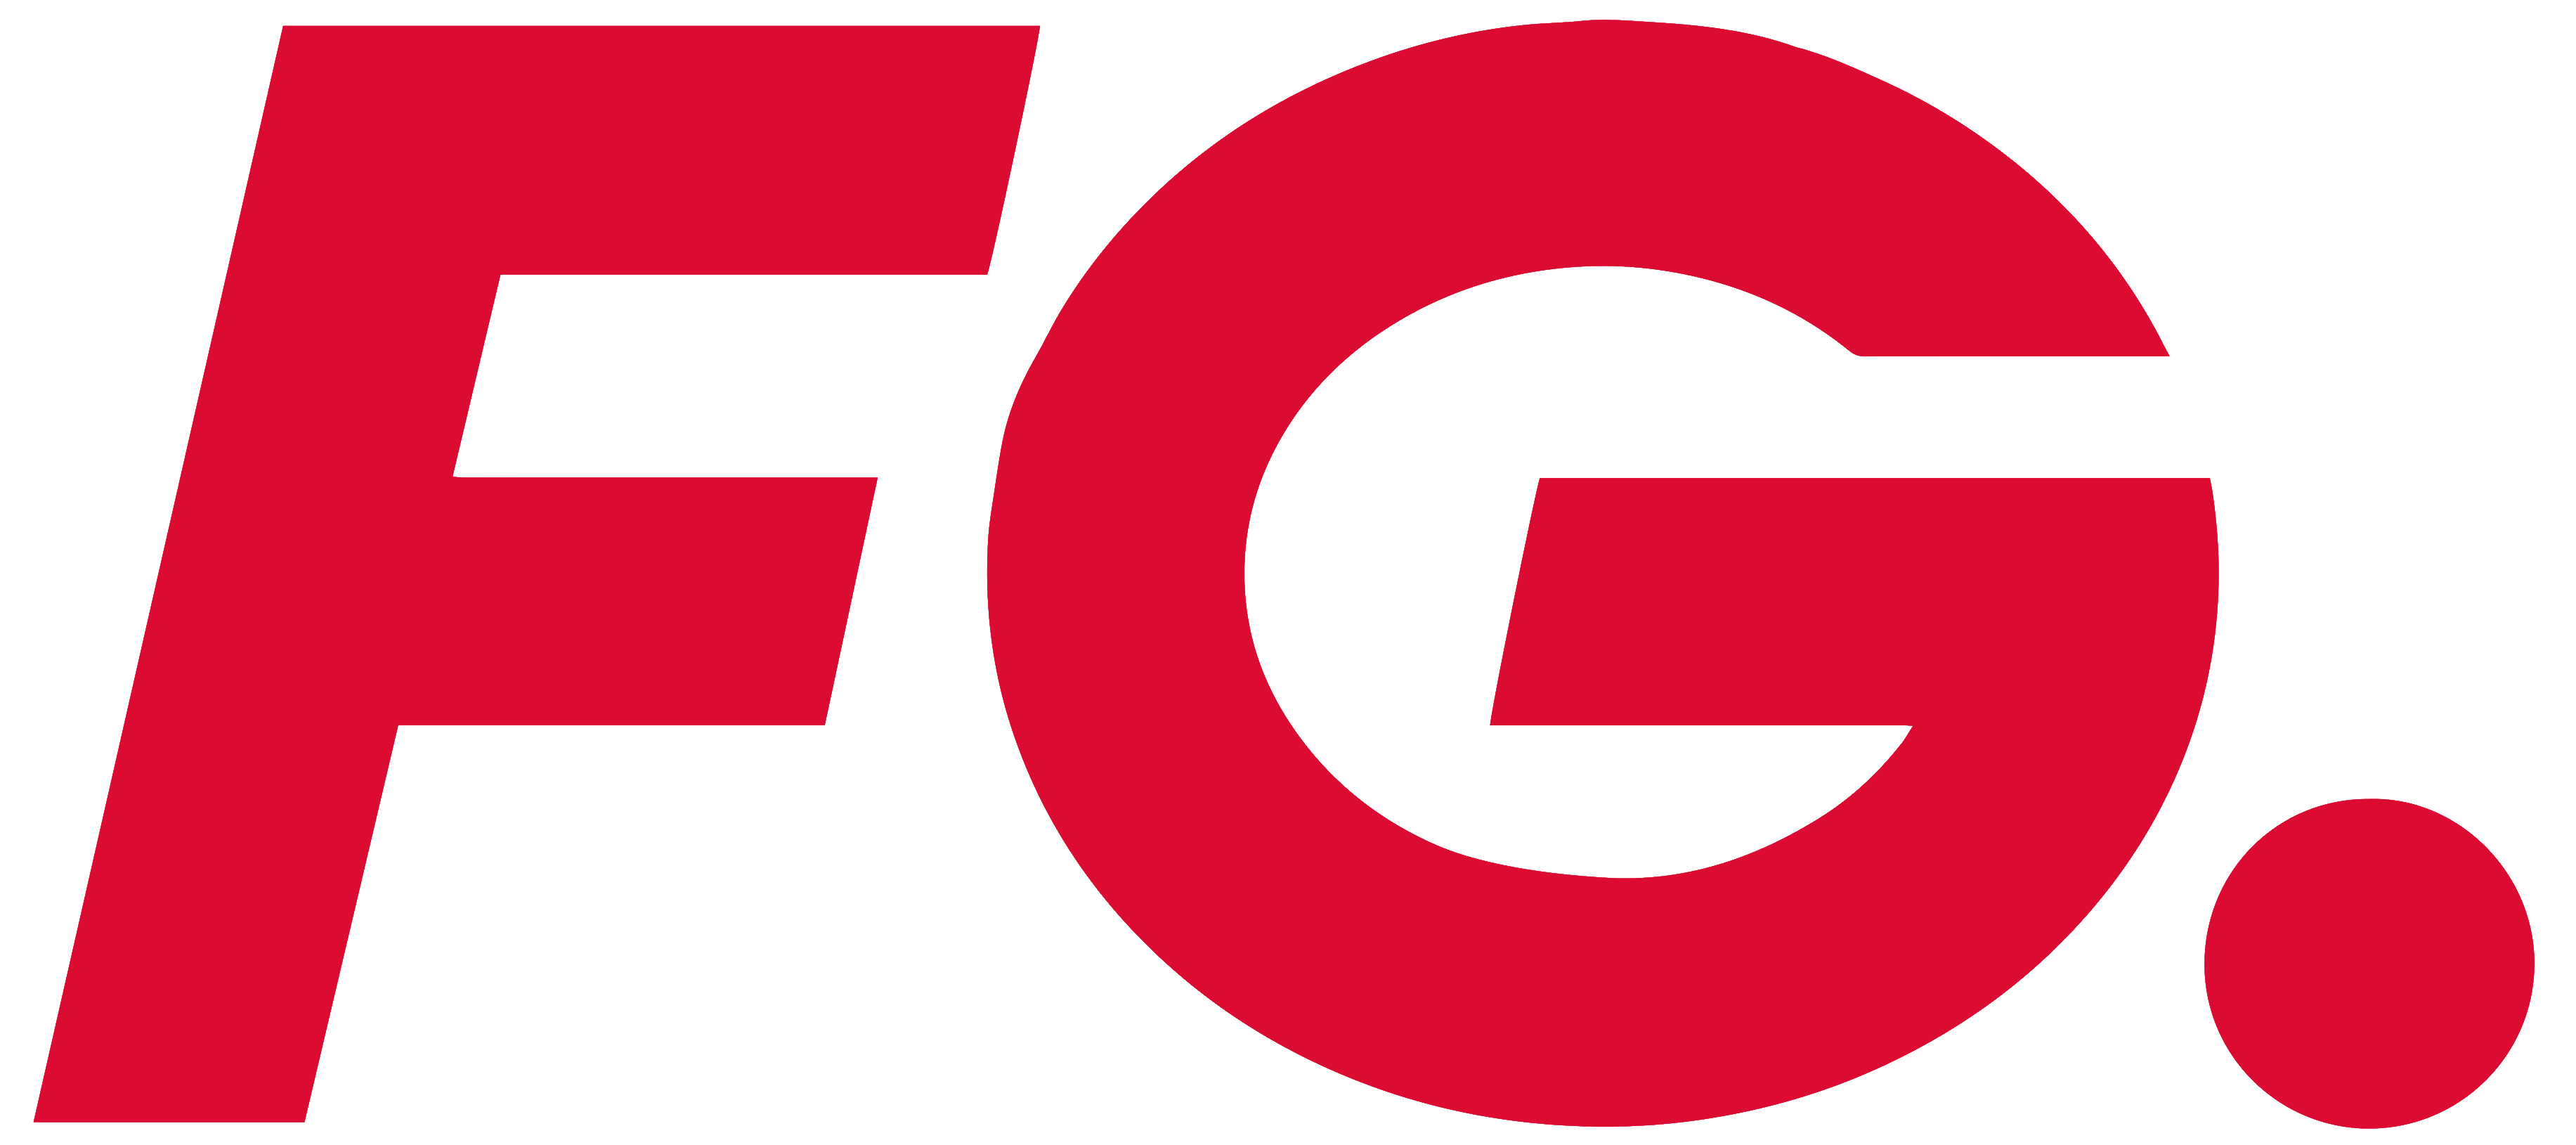 FG radio